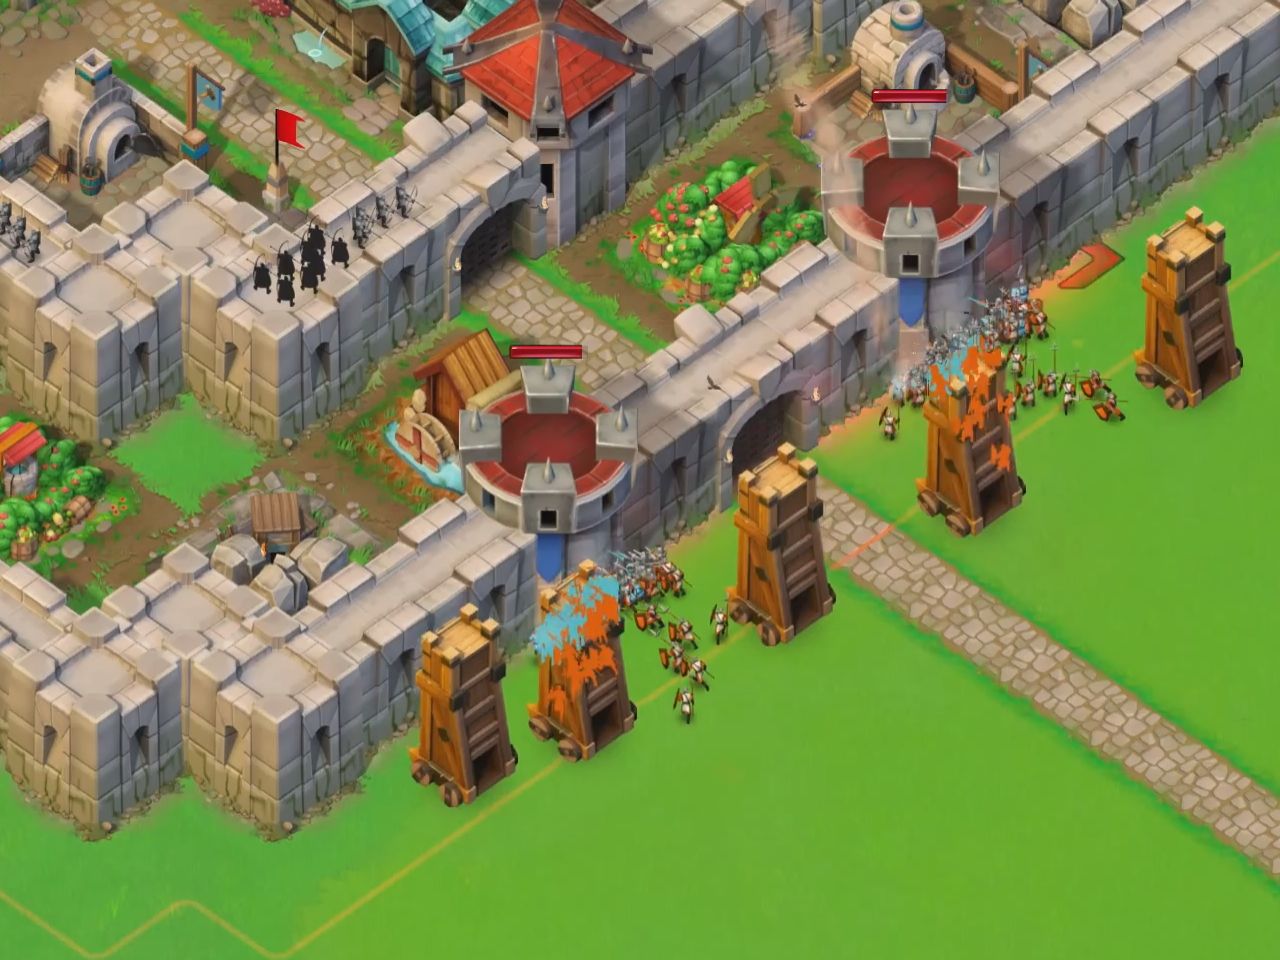 age of empires castle siege